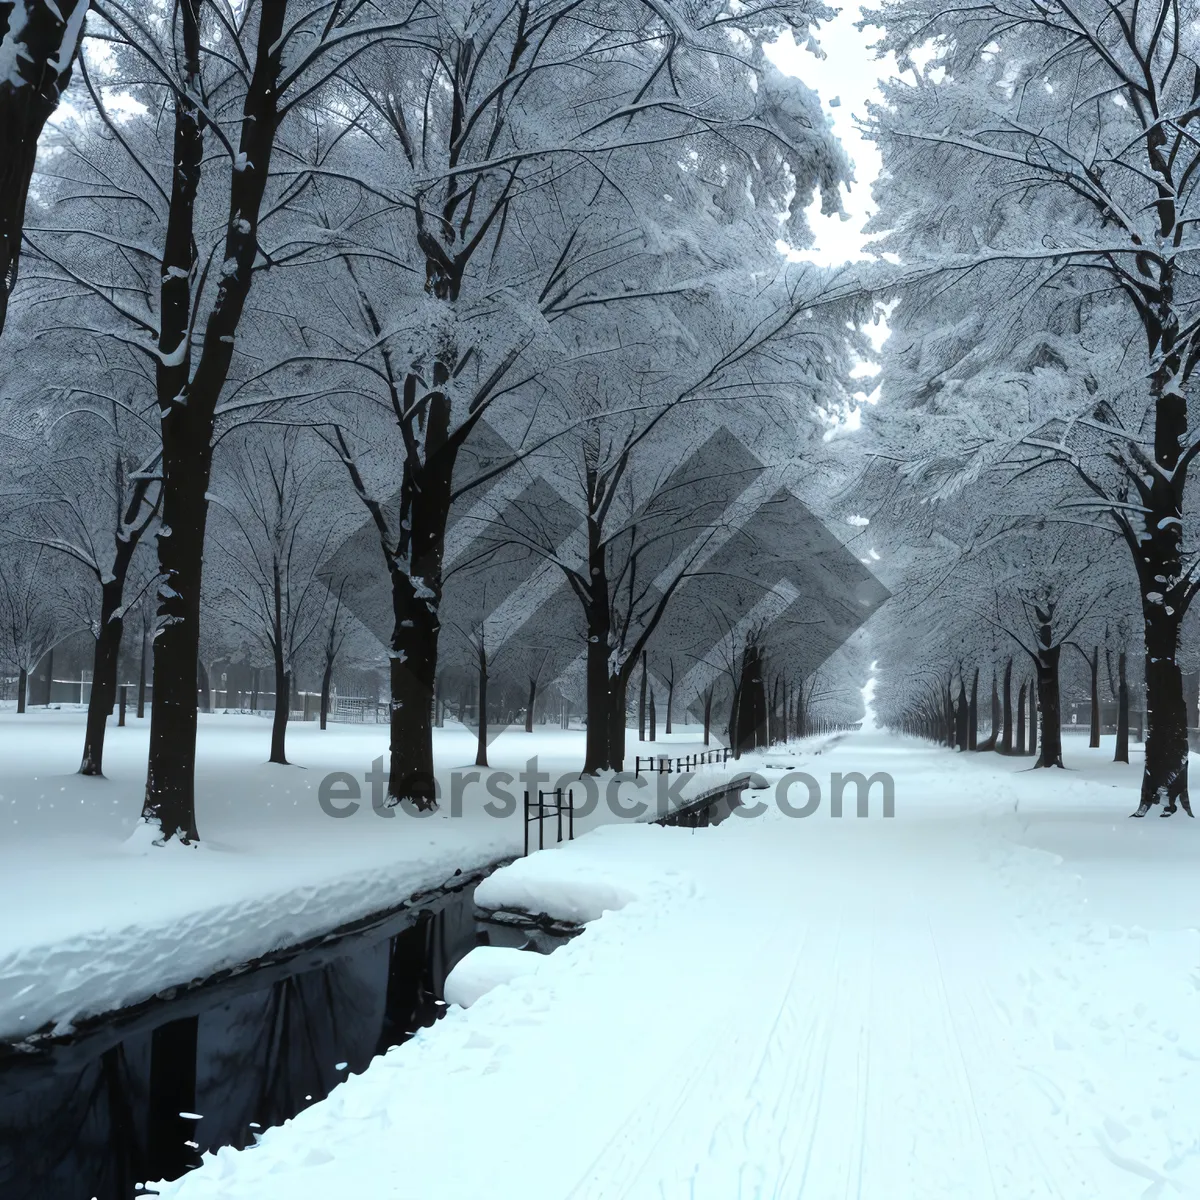 Picture of Frosty Winter Wonderland: Serene Snowy Forest Scene